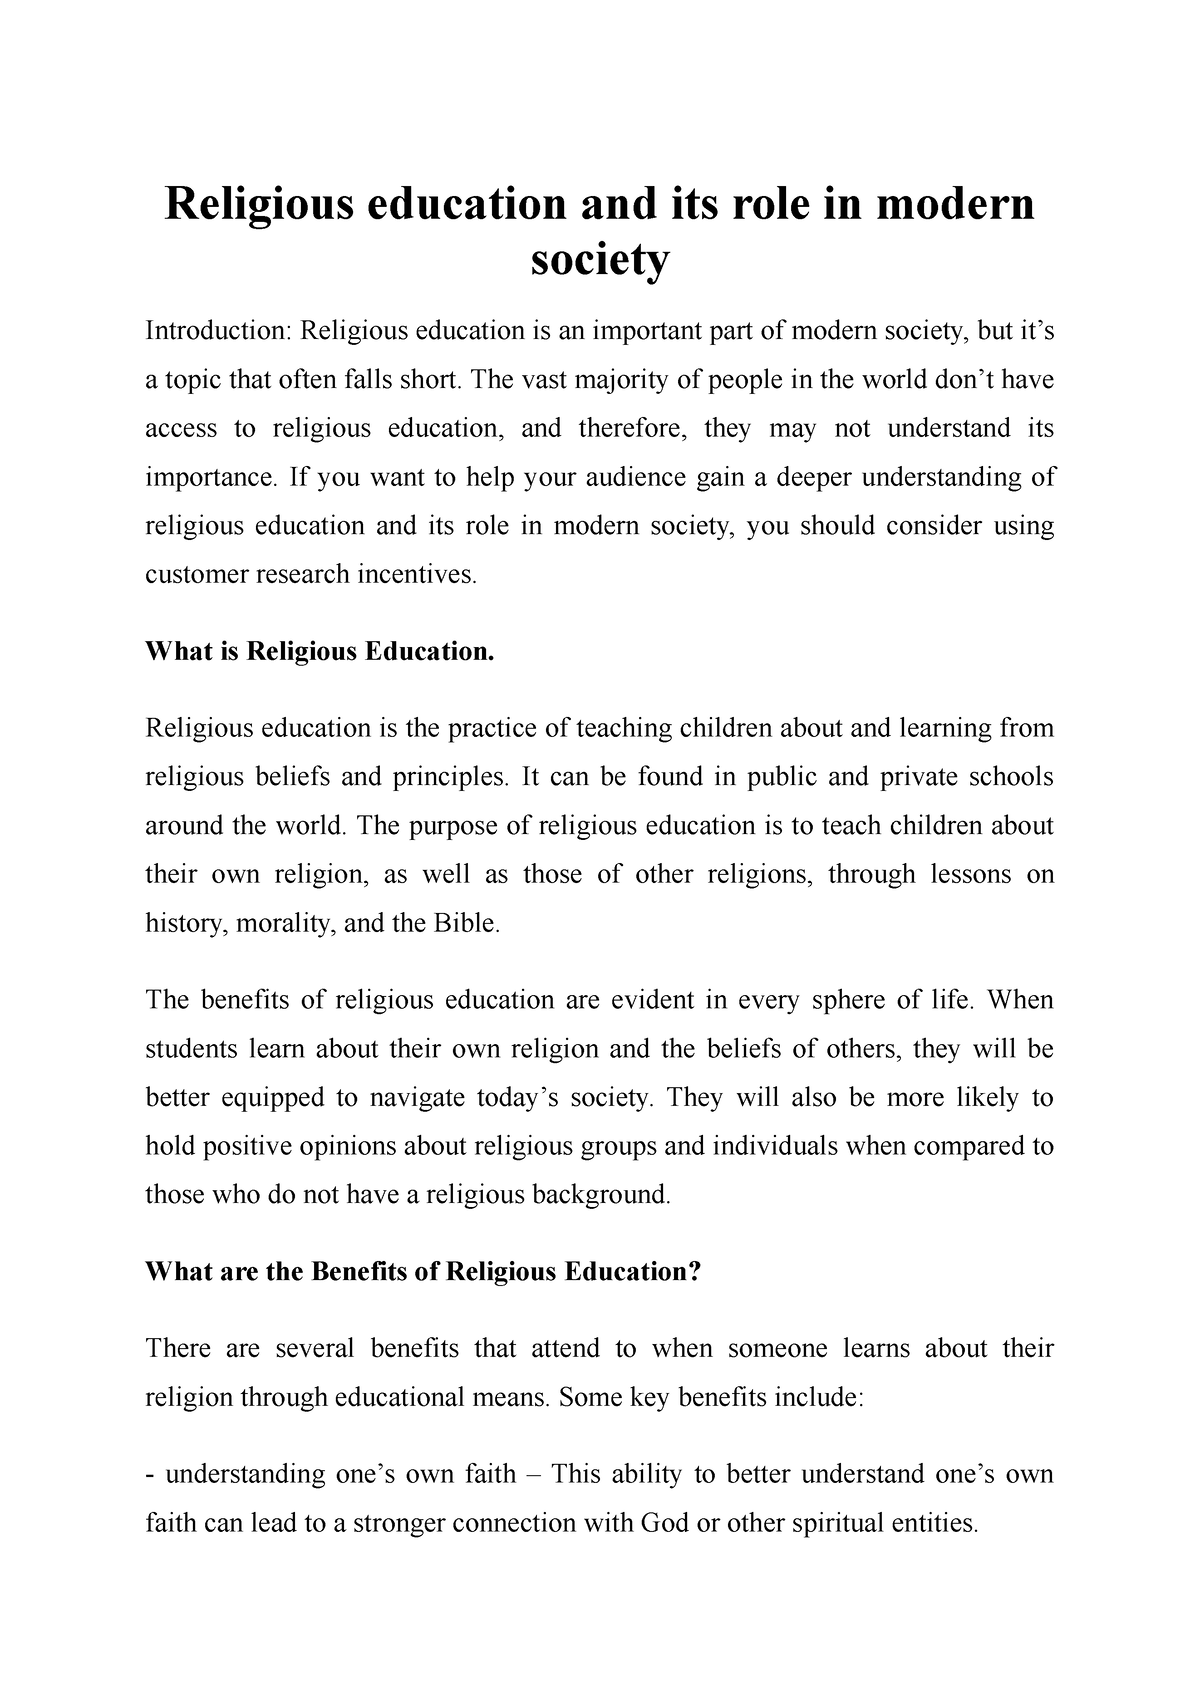 essay on religious education